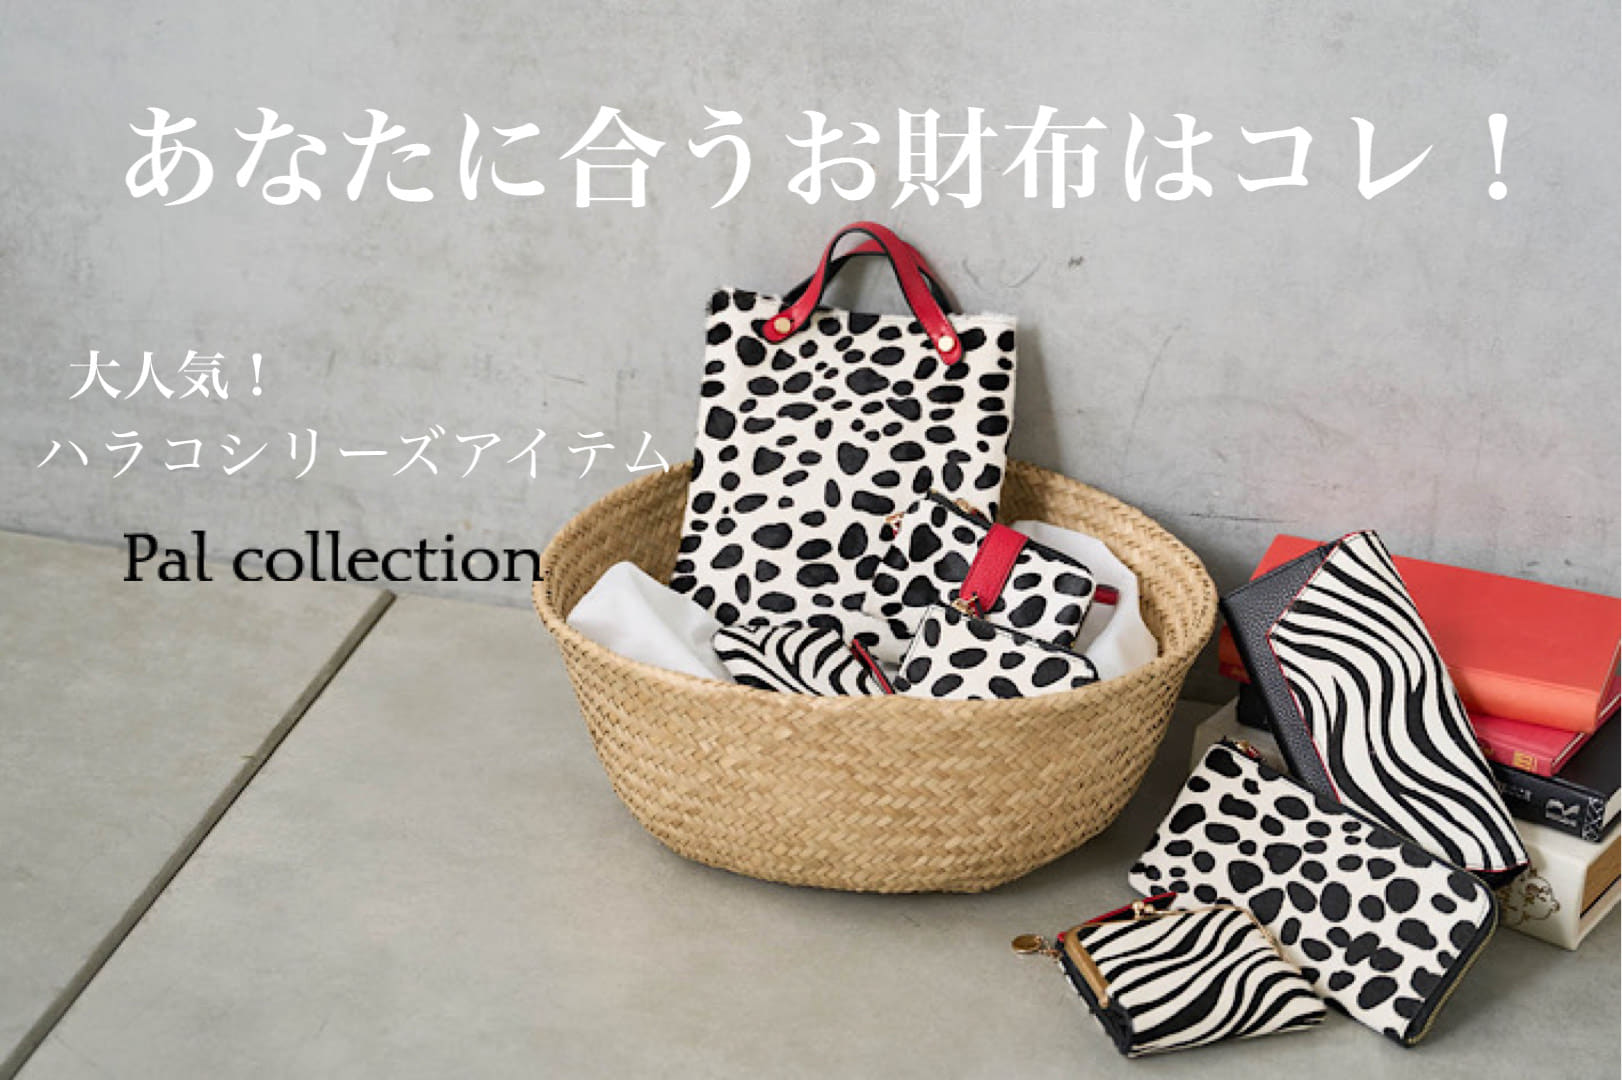 Pal collection 【ハラコシリーズ】あなたに合うお財布はコレ！